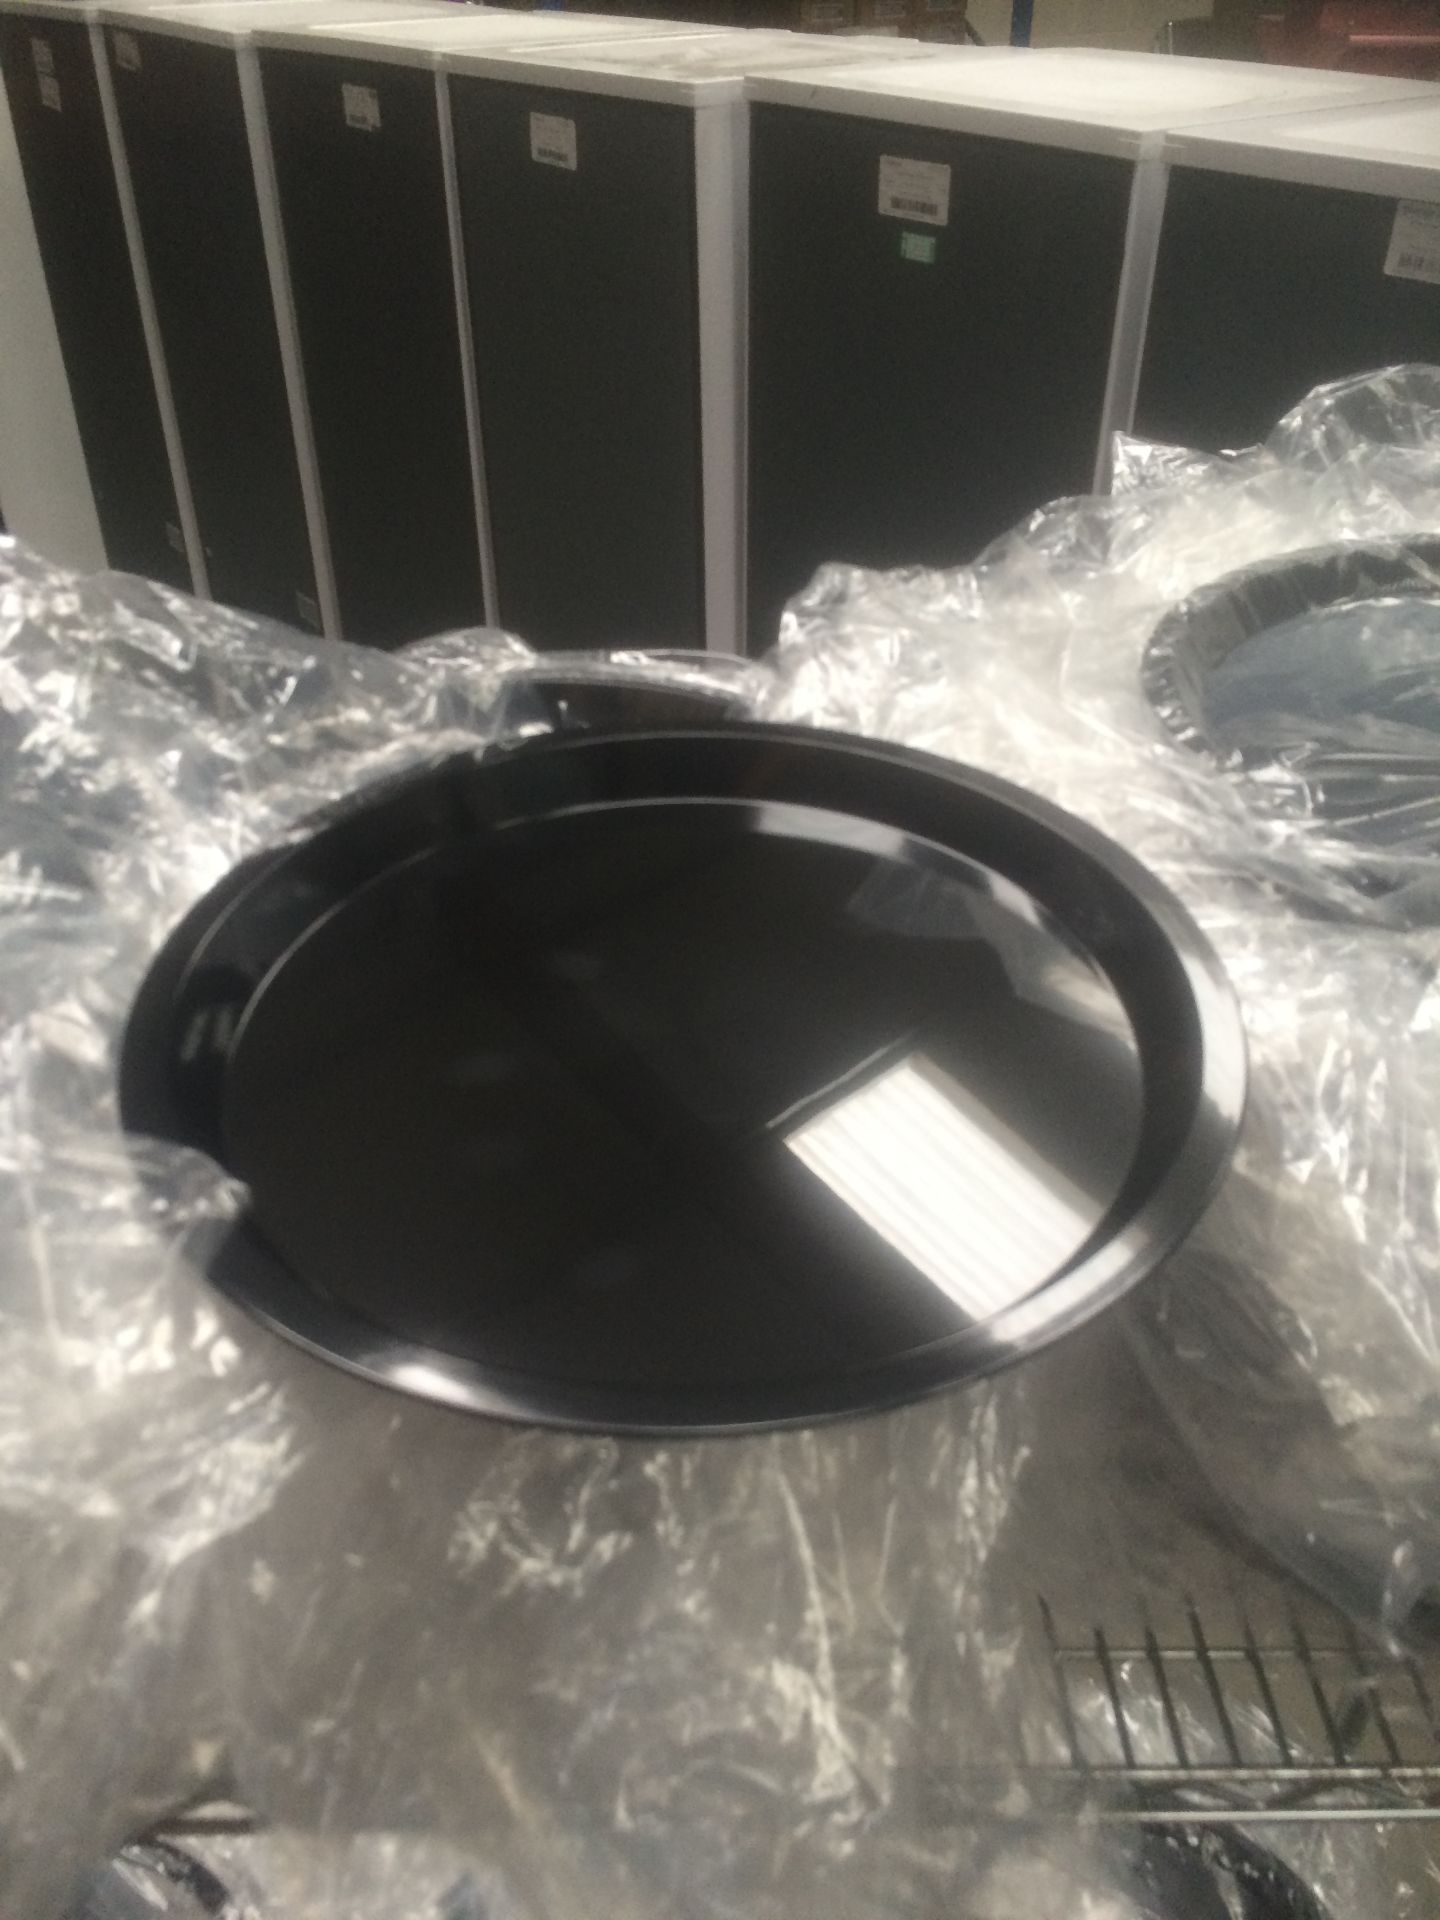 25 new Black round waiter service trays 325mm diameter